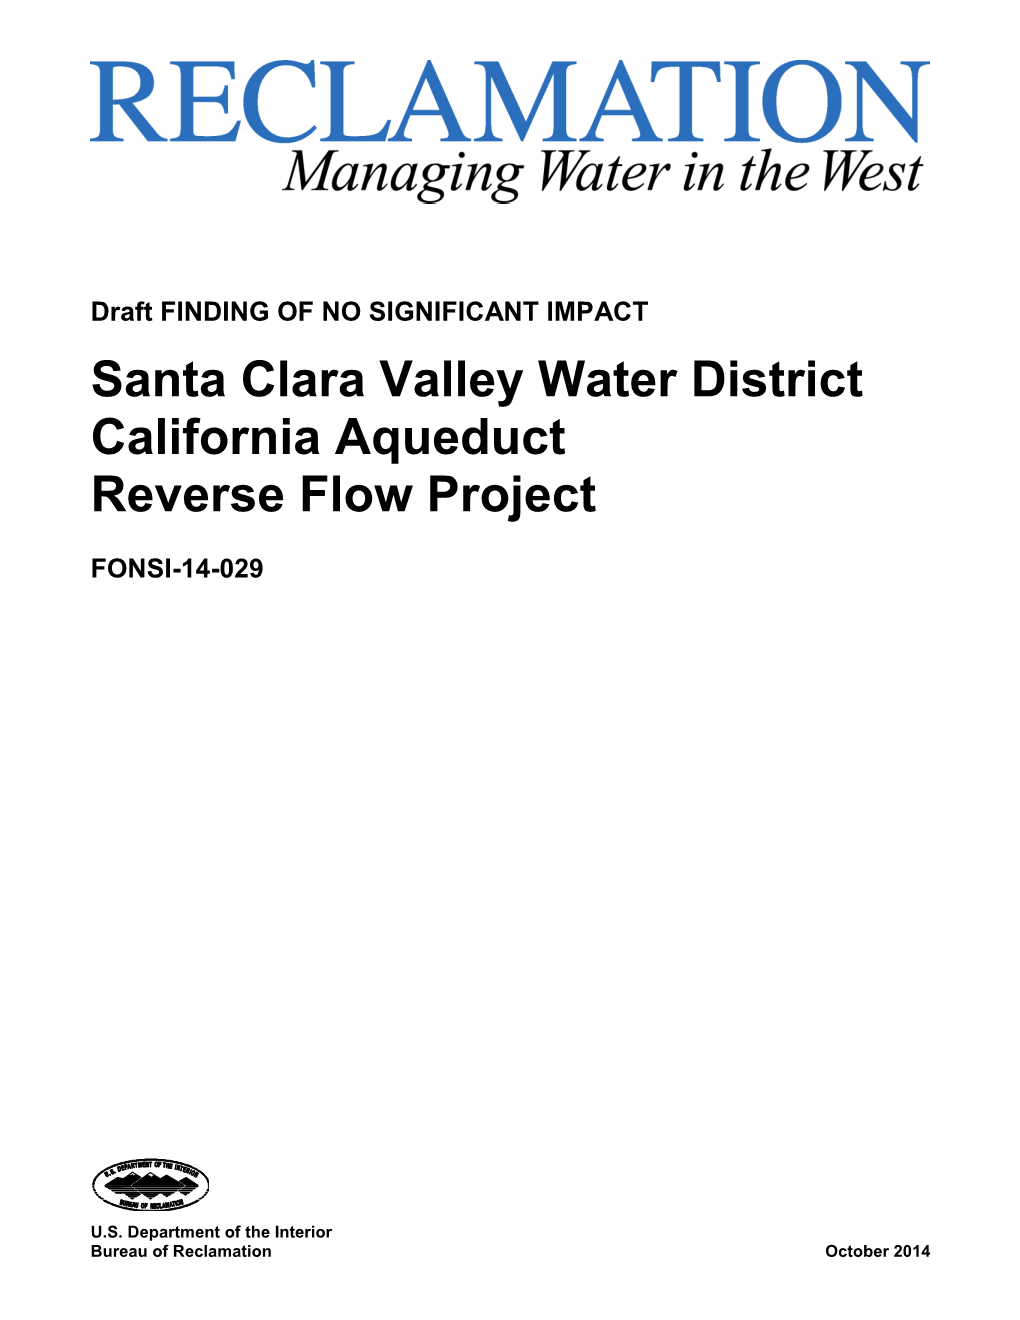 Santa Clara Valley Water District California Aqueduct Reverse Flow Project